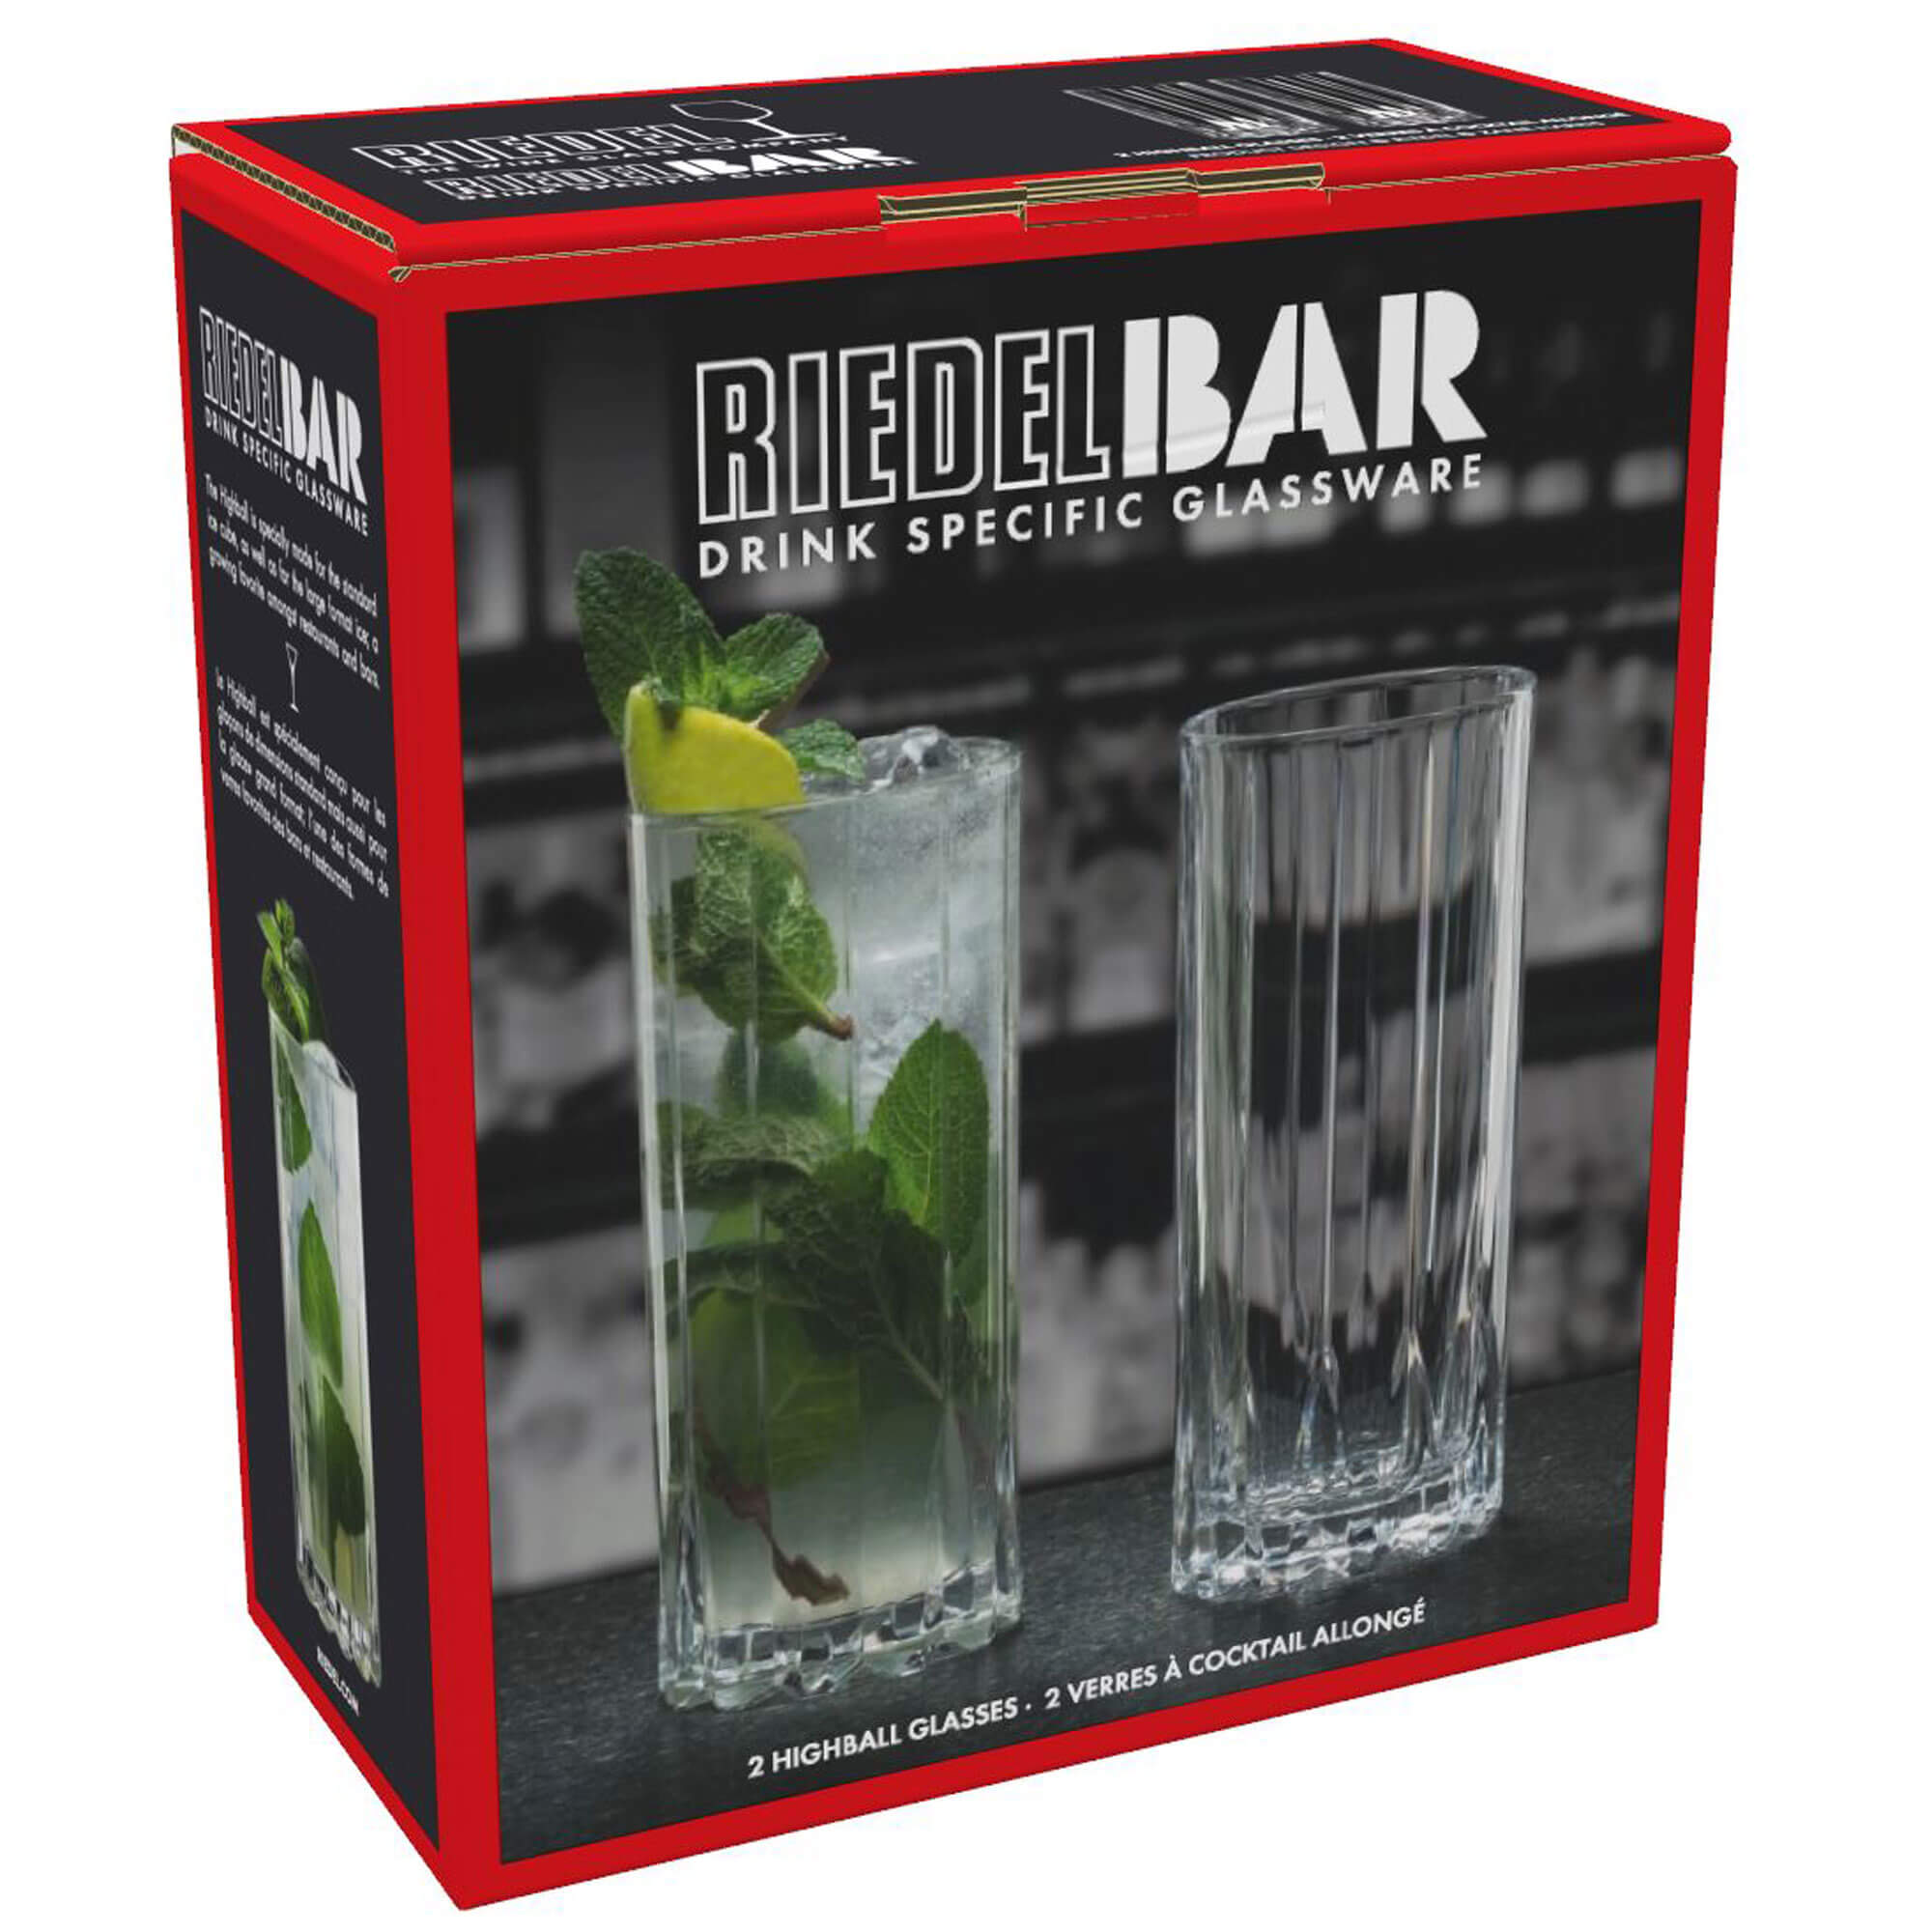 Highballglas Drink Specific Glassware, Riedel Bar - 310ml (2 Stk.)